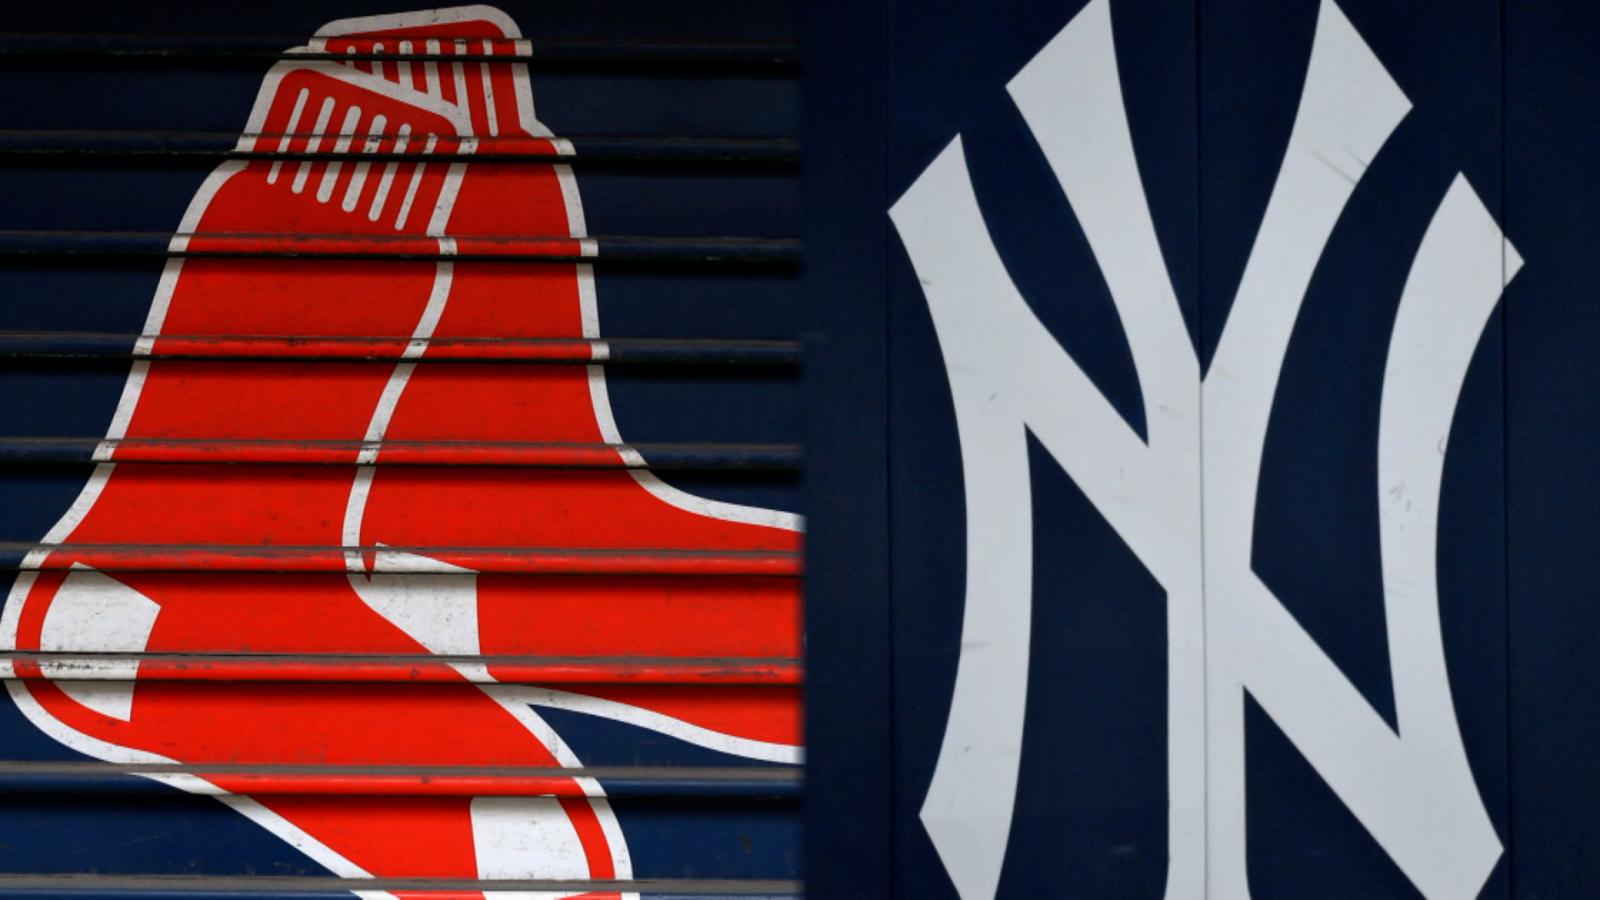 Red Sox vs. Yankees: la rivalidad se revive en la postemporada de la MLB